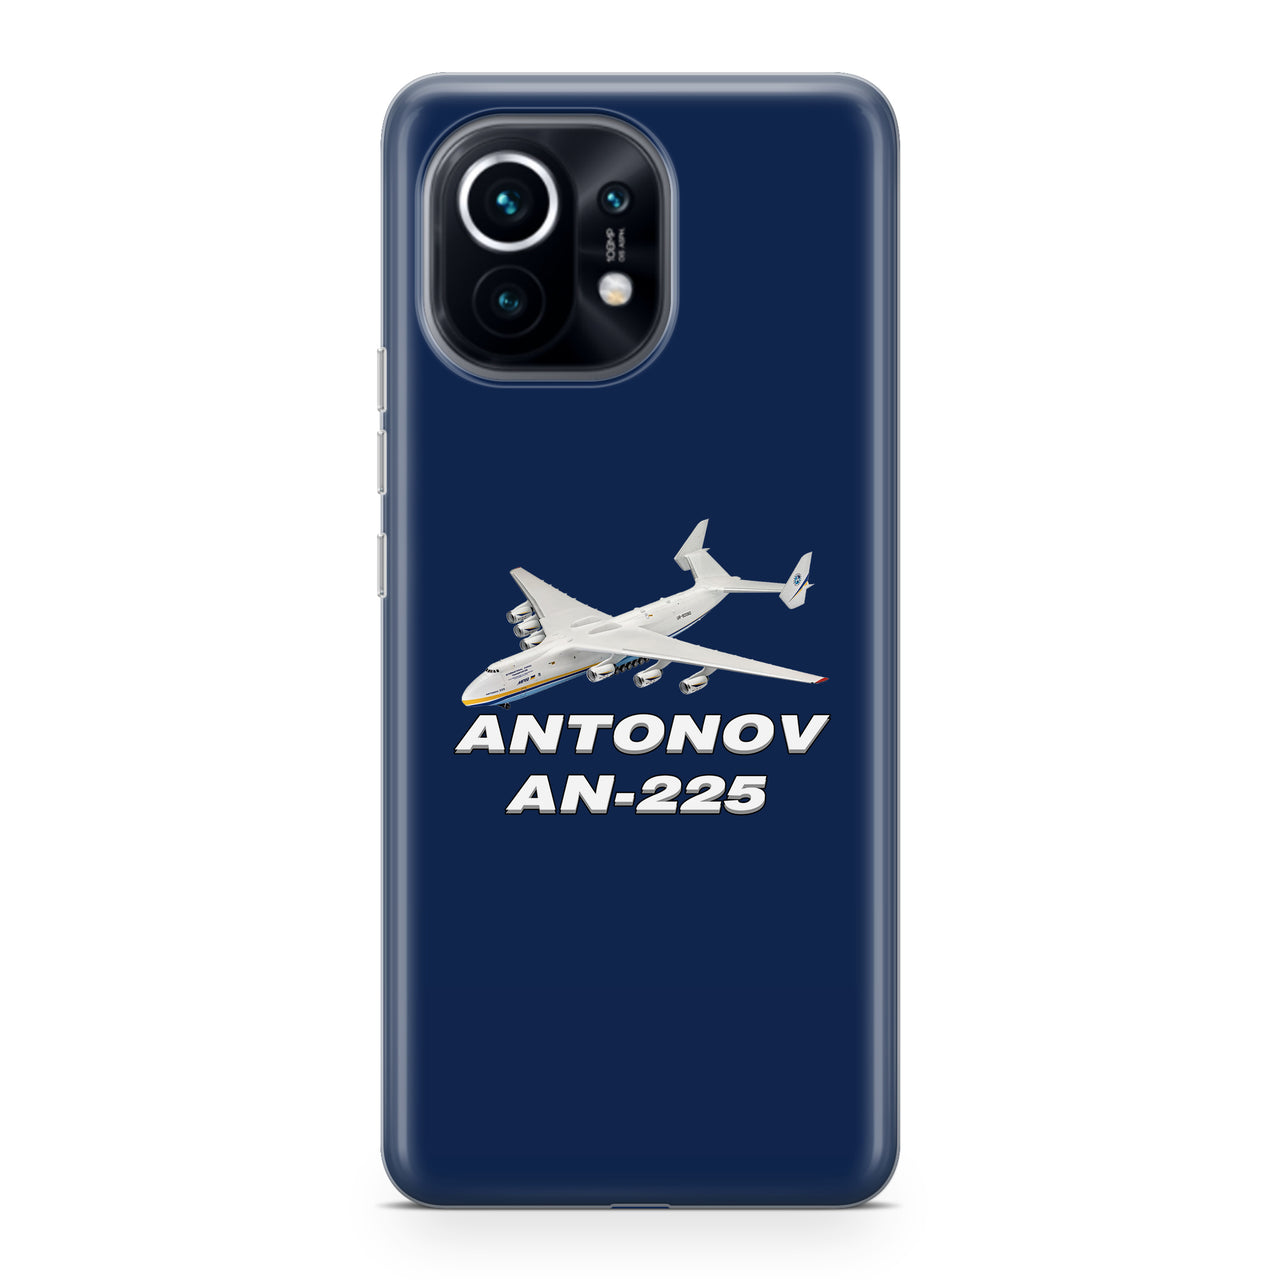 Antonov AN-225 (12) Designed Xiaomi Cases